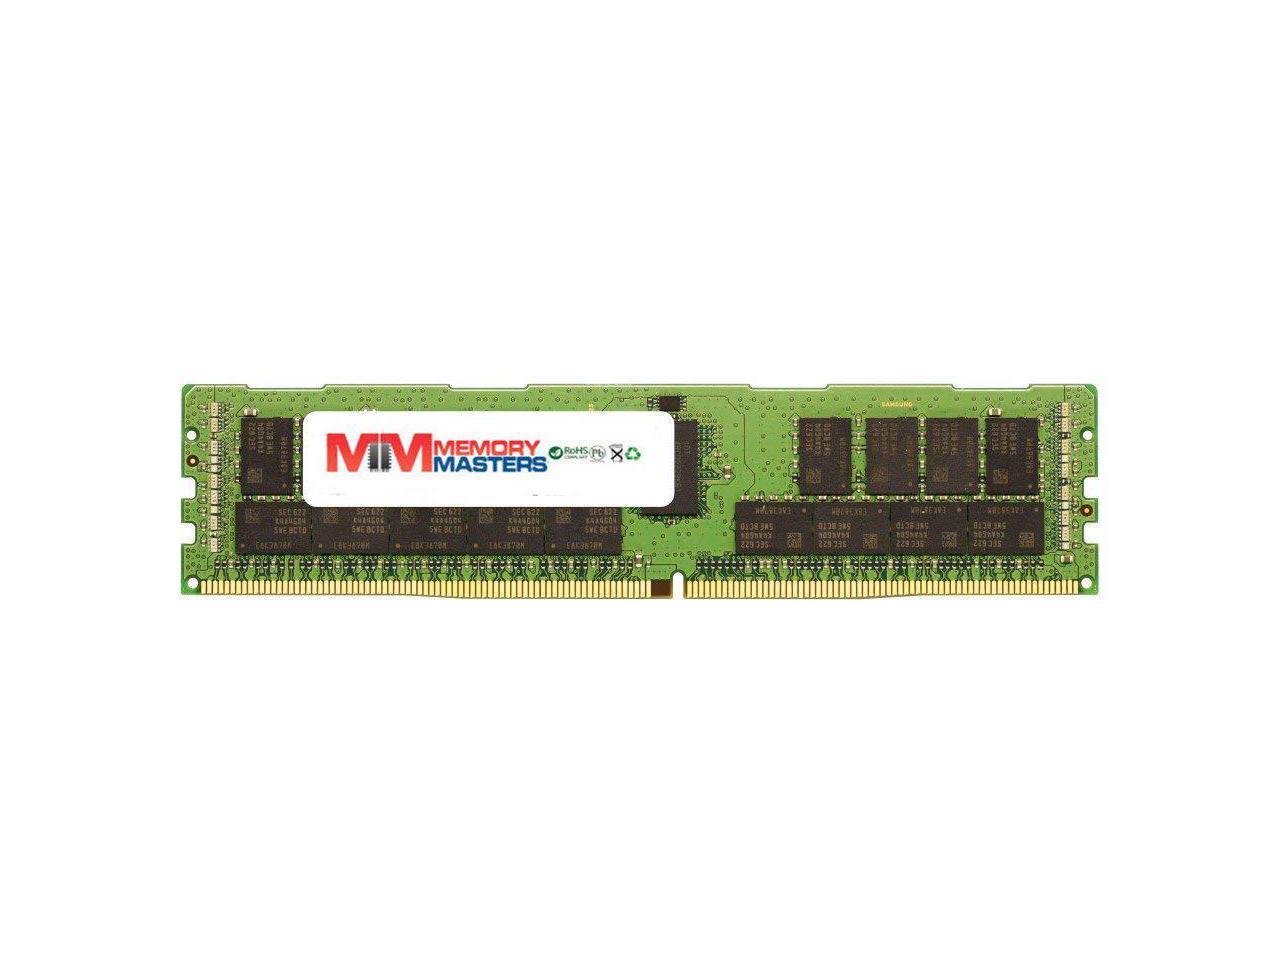 MemoryMasters Supermicro MEM-DR416L-HL01-ER21 16GB (1x16GB) DDR4 